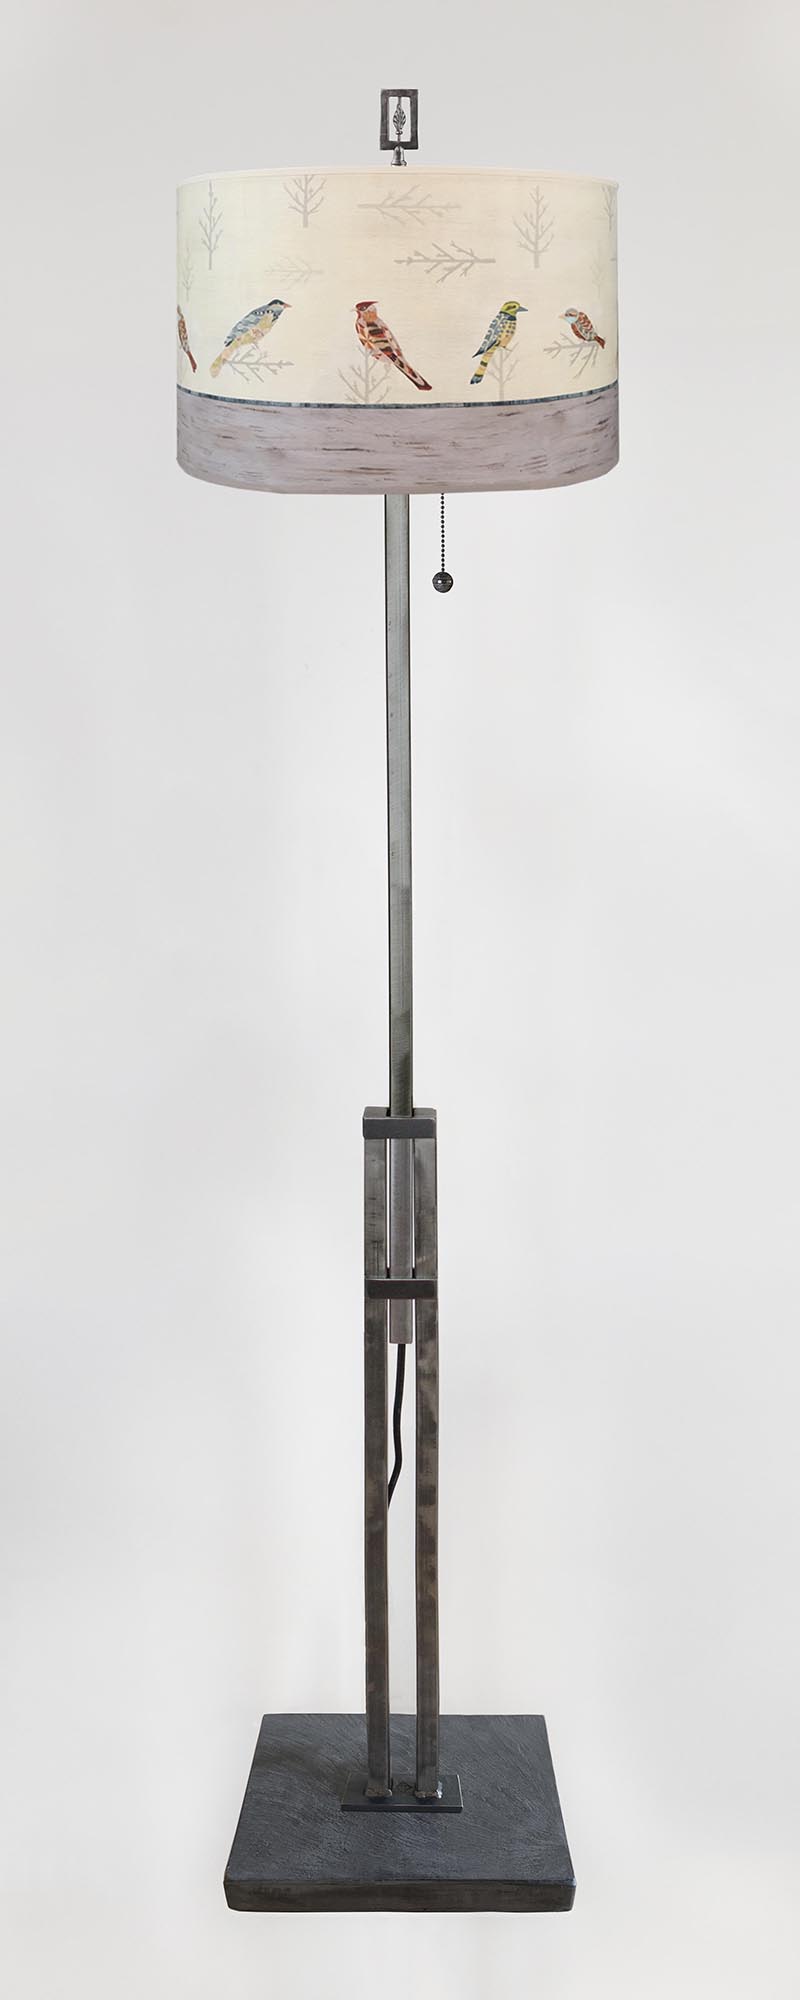 Adjustable-Height Steel Floor Lamp with Large Drum Shade in Bird Friends